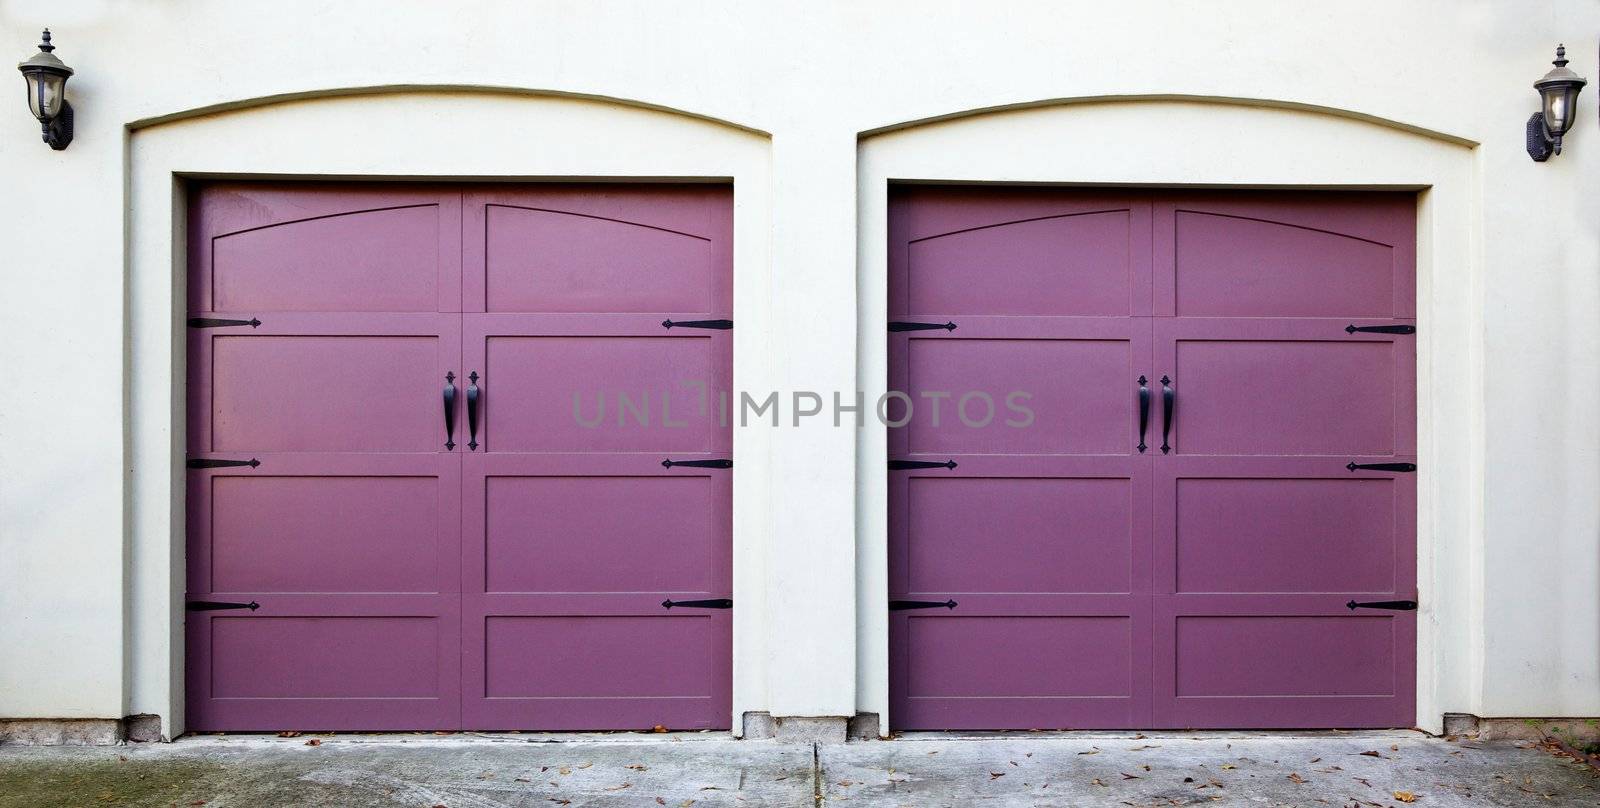 Two Violet Garage Doors by bobkeenan